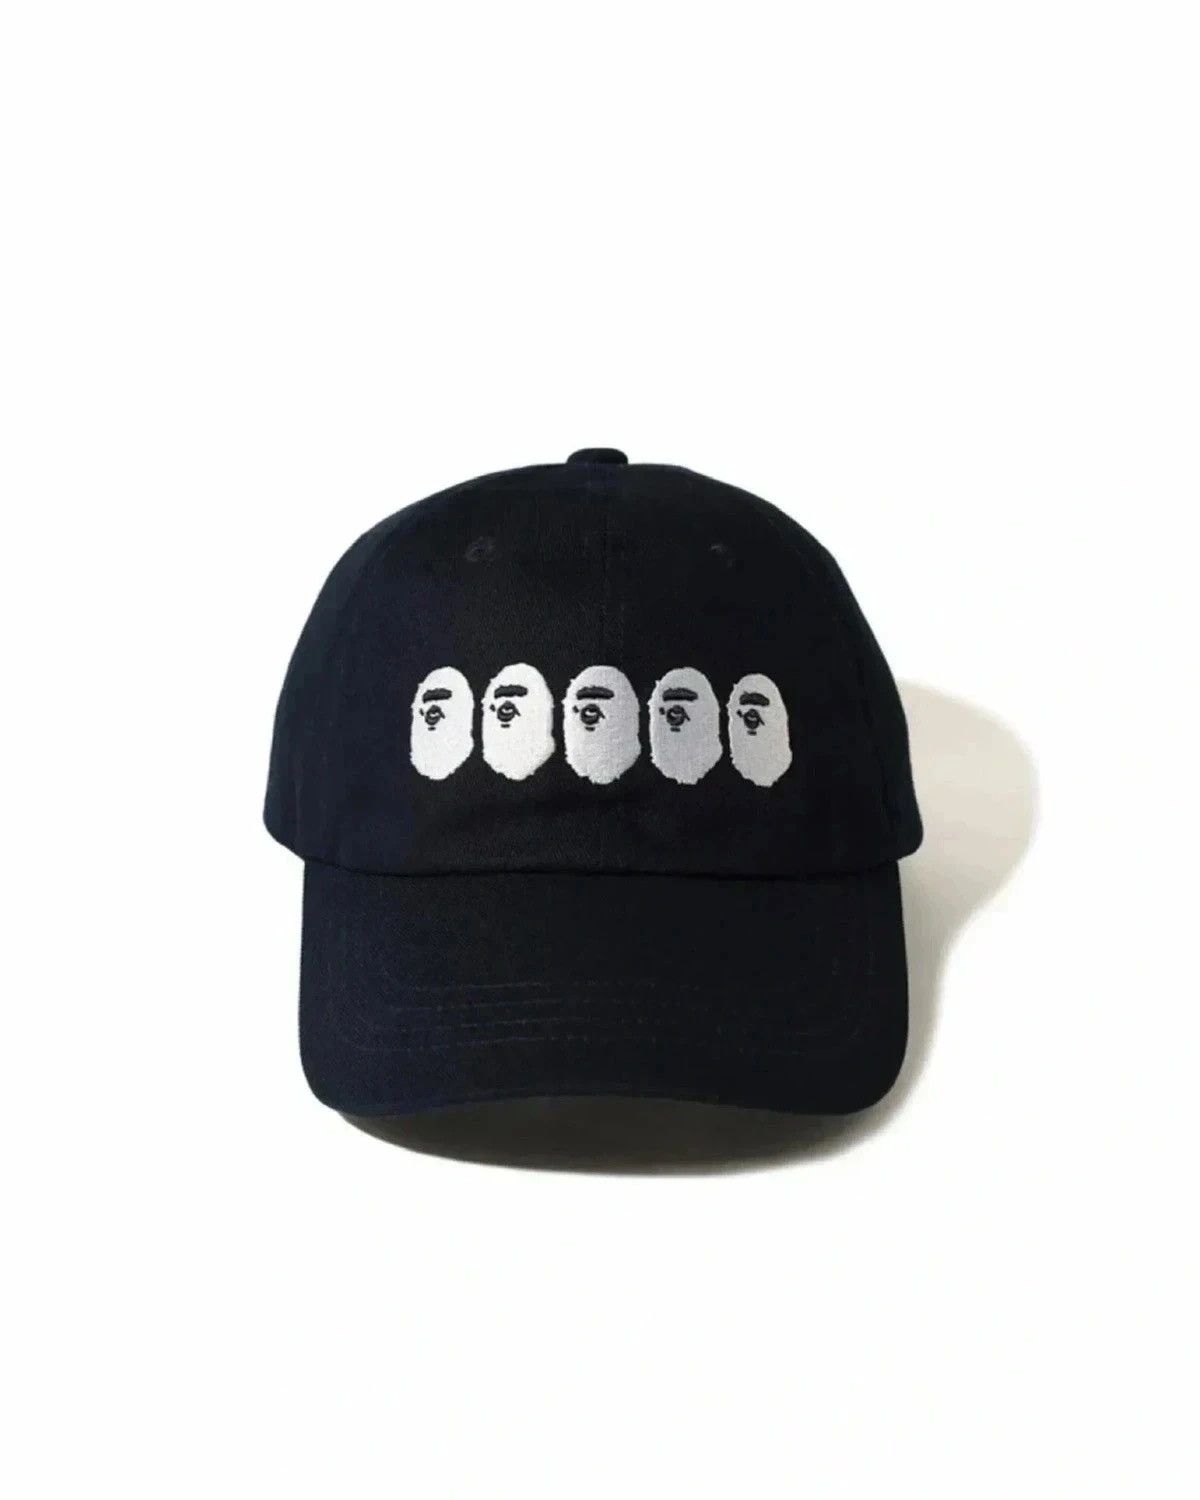 Pre-owned Bape 2021 Summer Bag Go Skate Hat Cap Navy (cap Only)